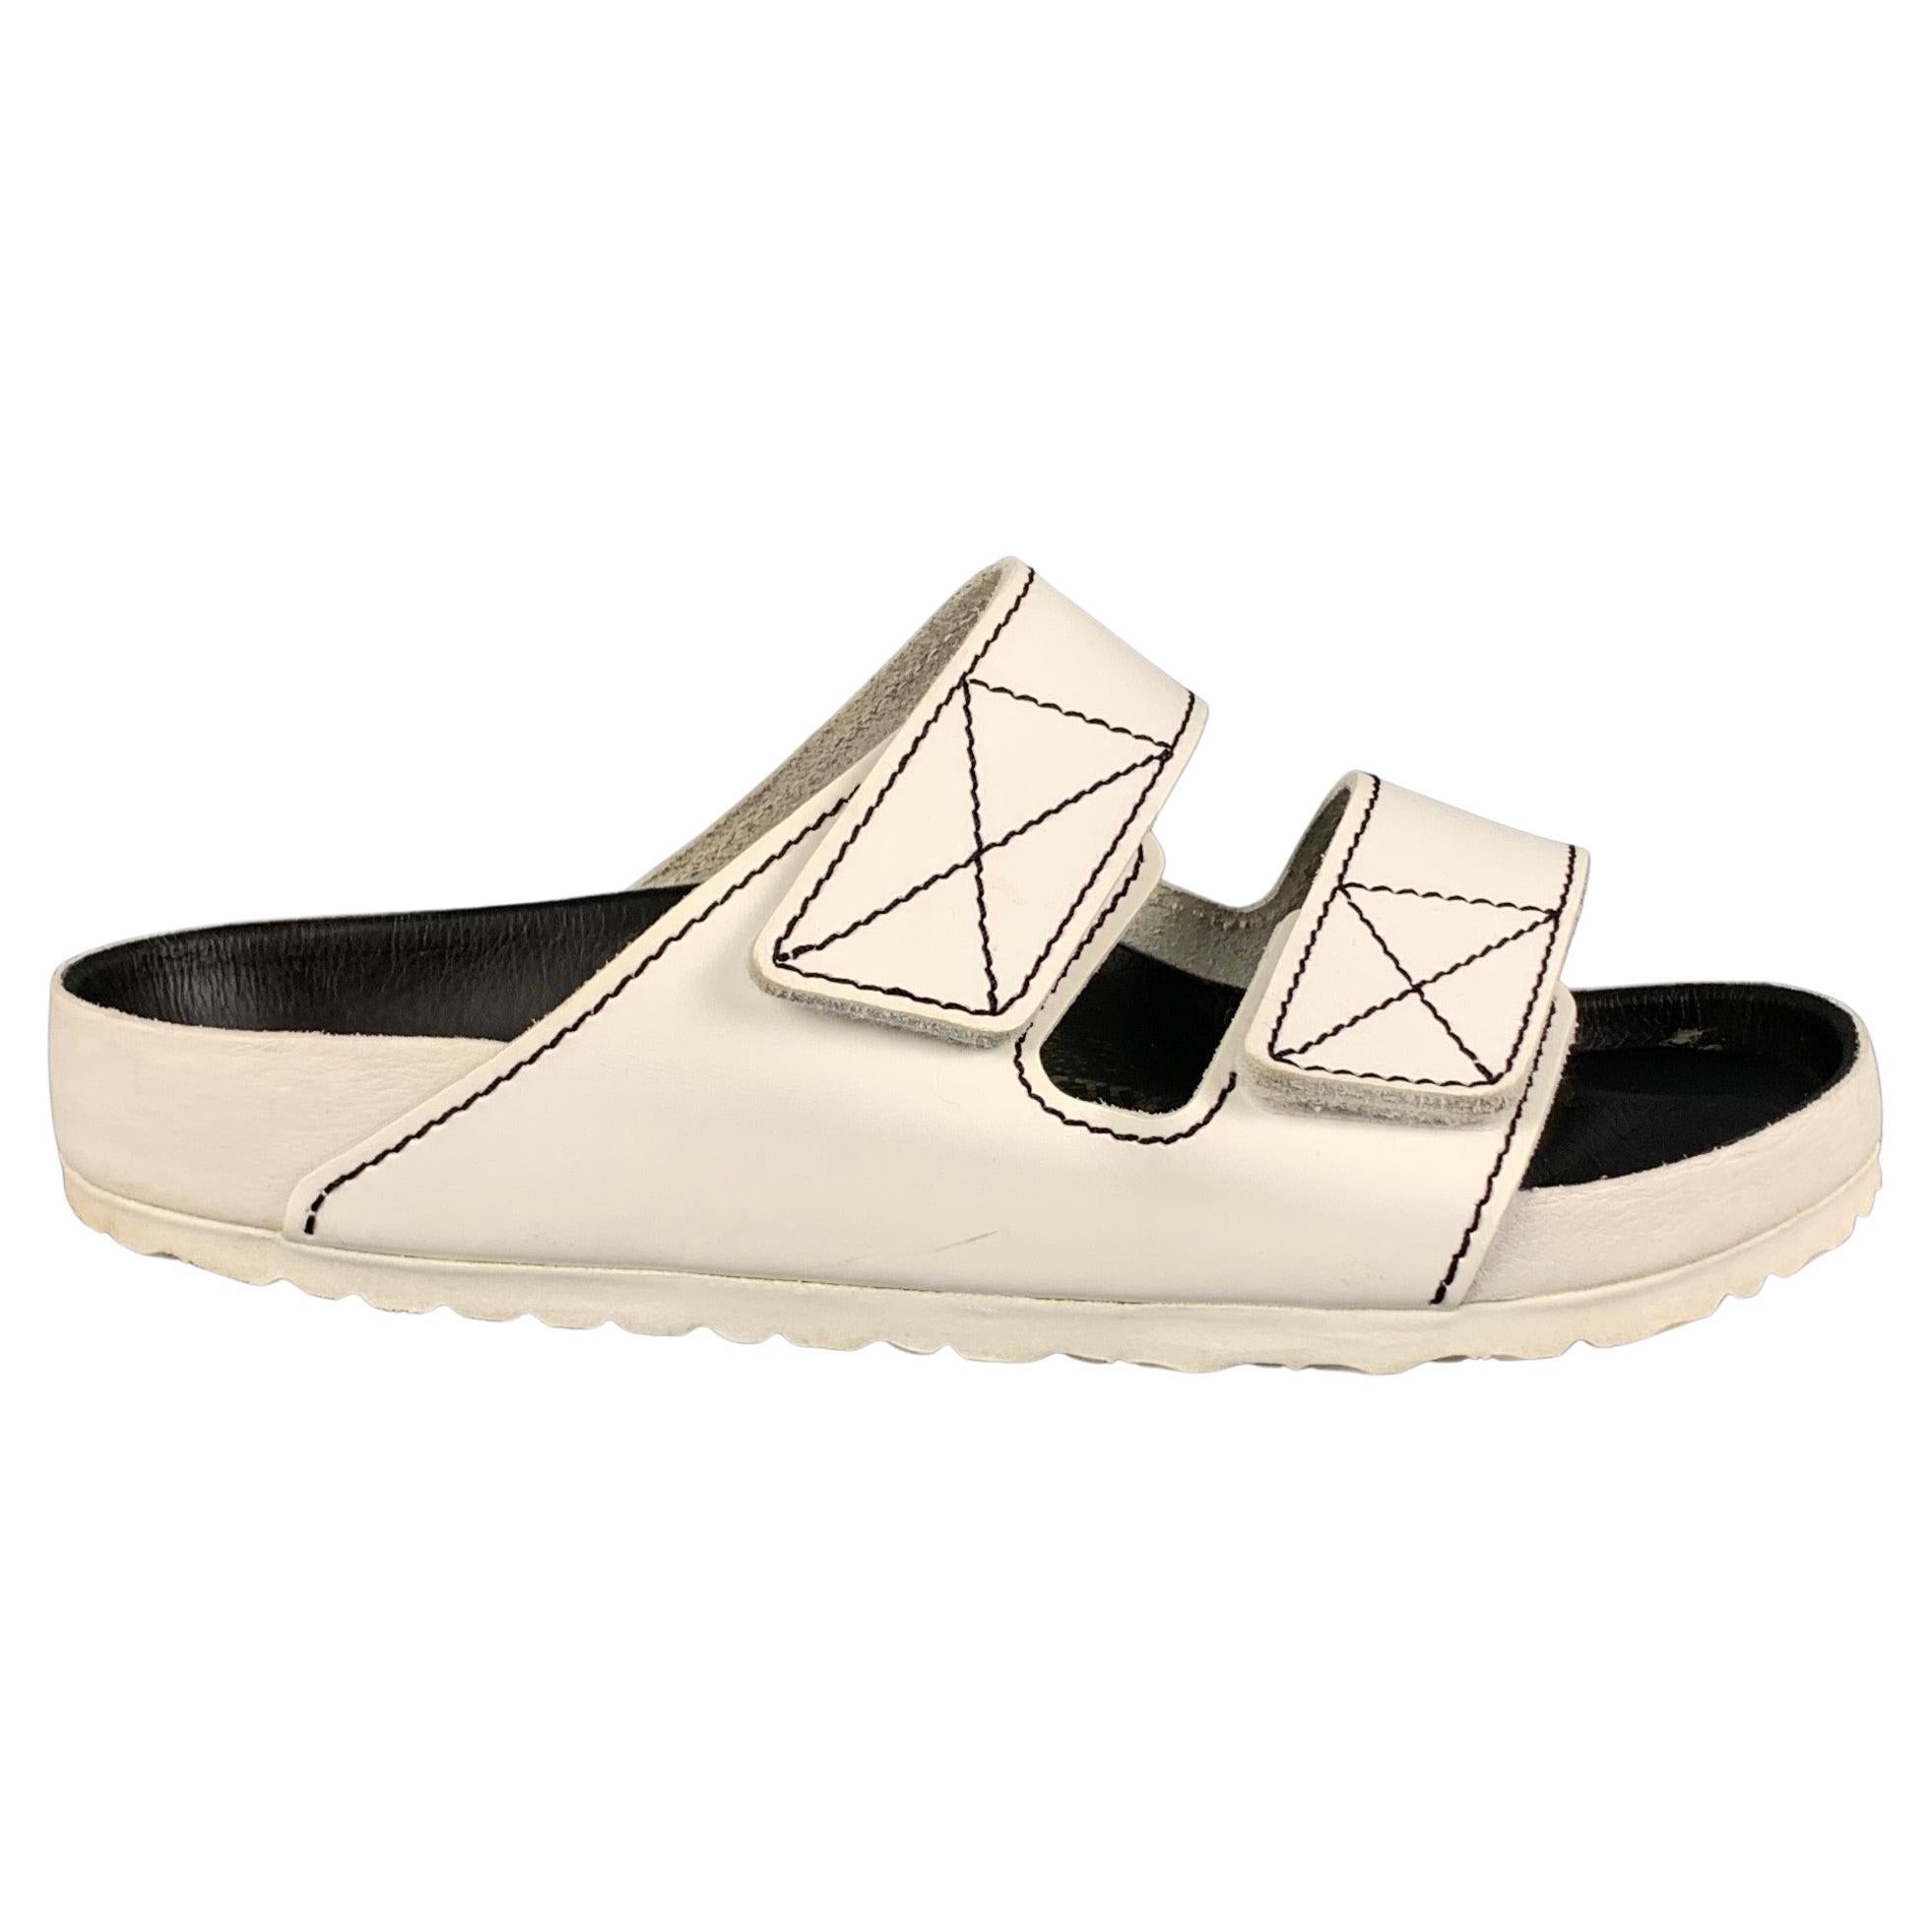 BIRKENSTOCK x PROENZA SCHOULER Size 9 White Contrast Stitch Leather Sandals